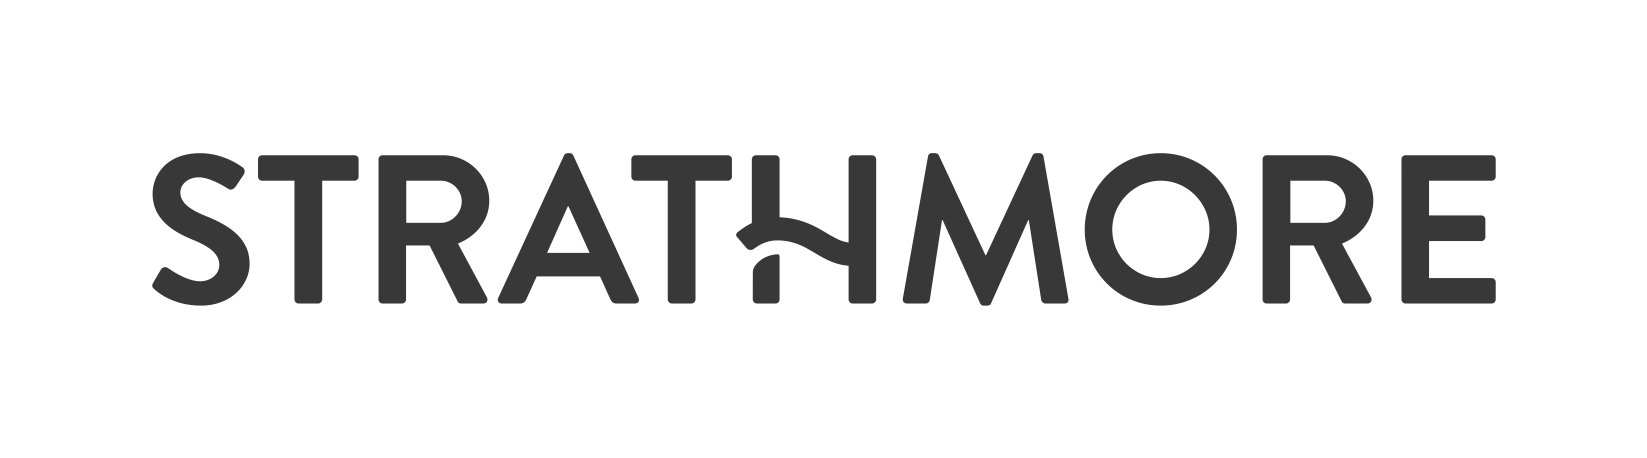 strathmore logo.jpeg